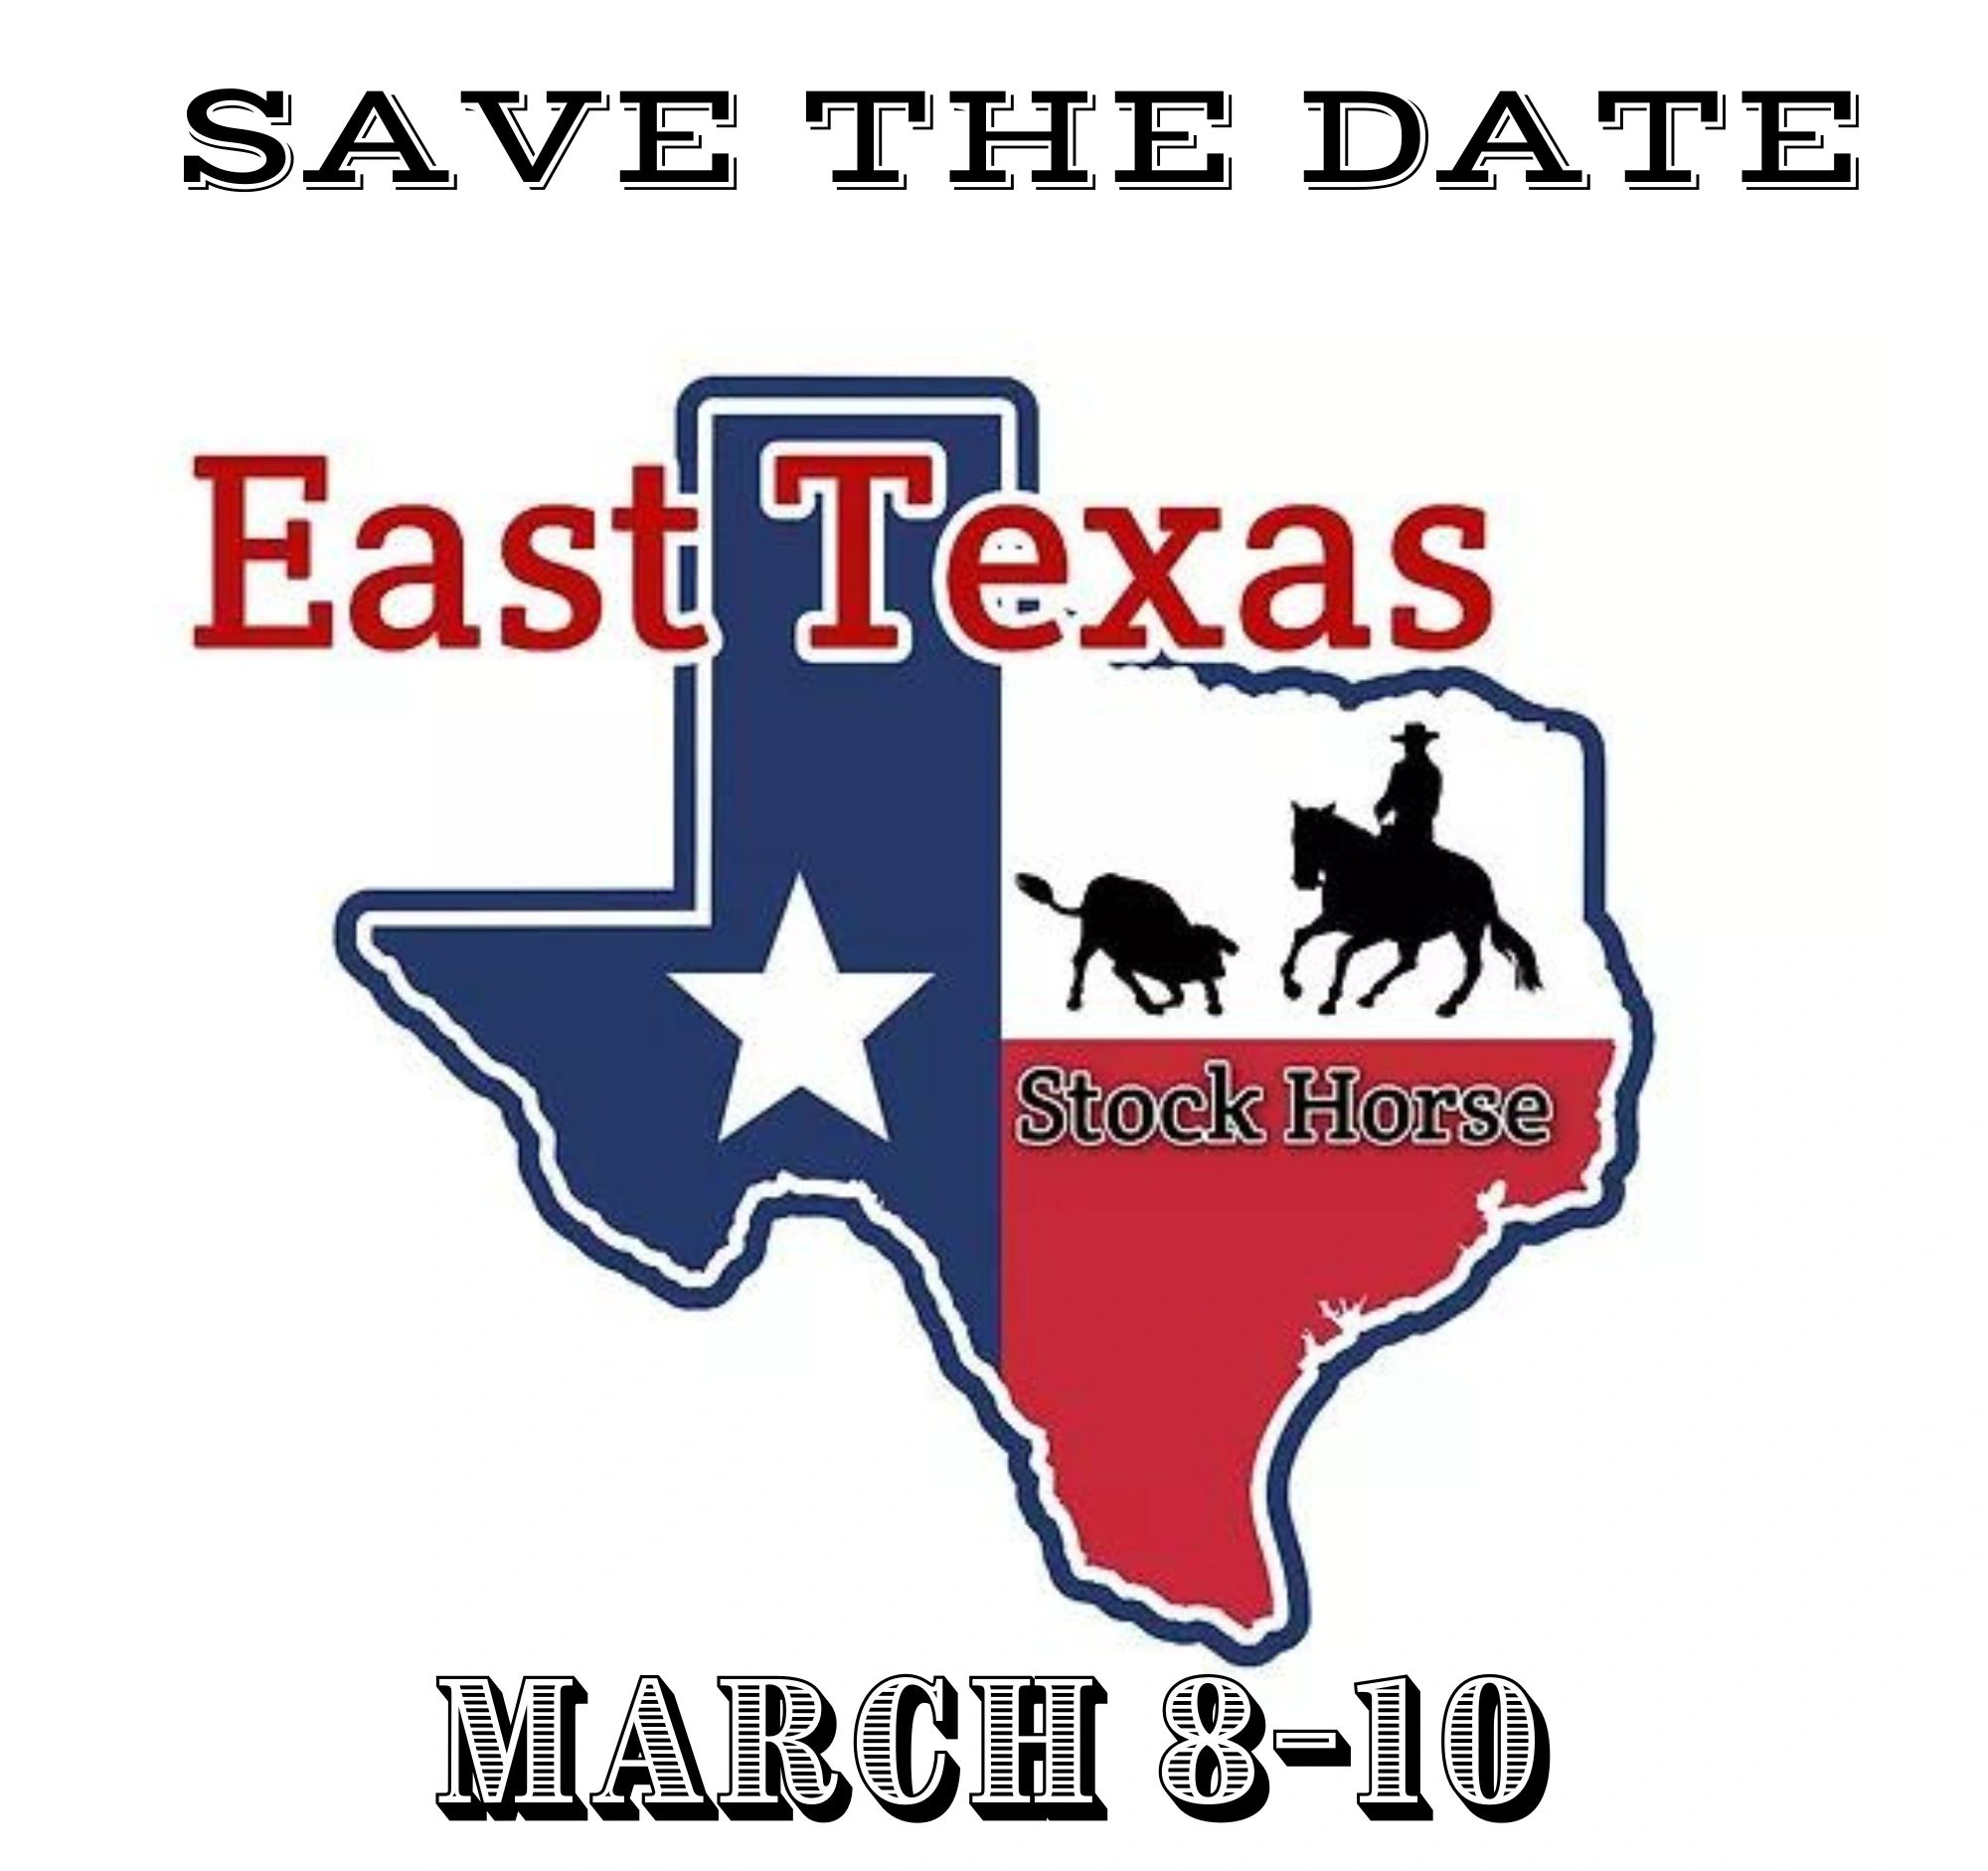 East Texas Stock Horse